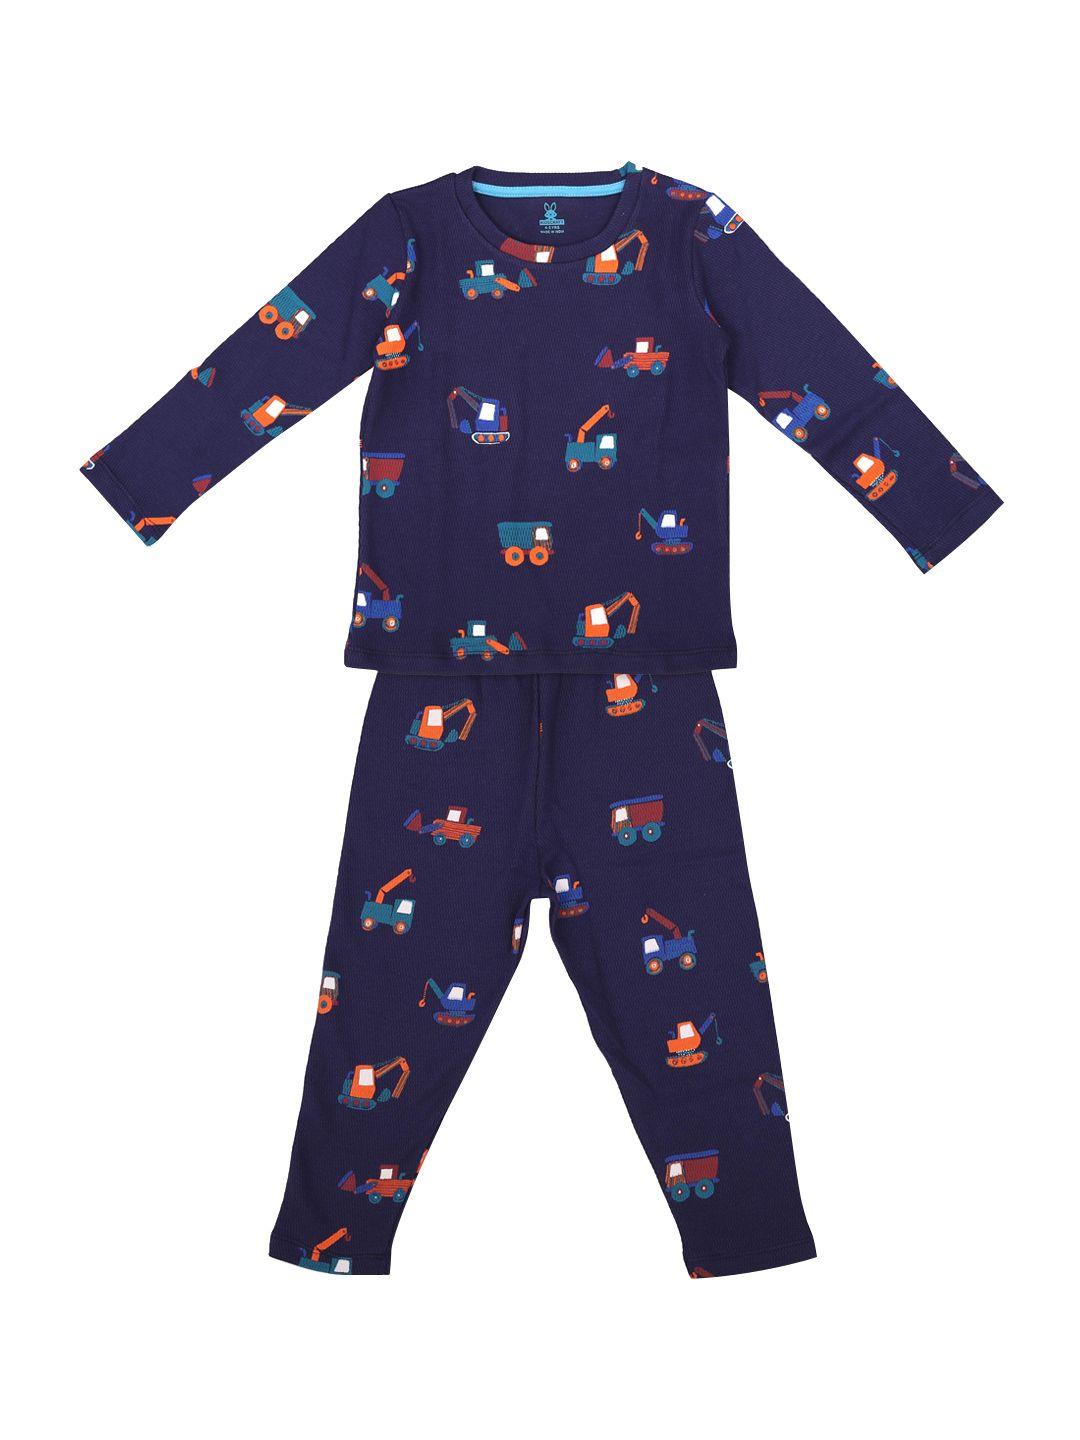 kidscraft boys graphic printed night suit